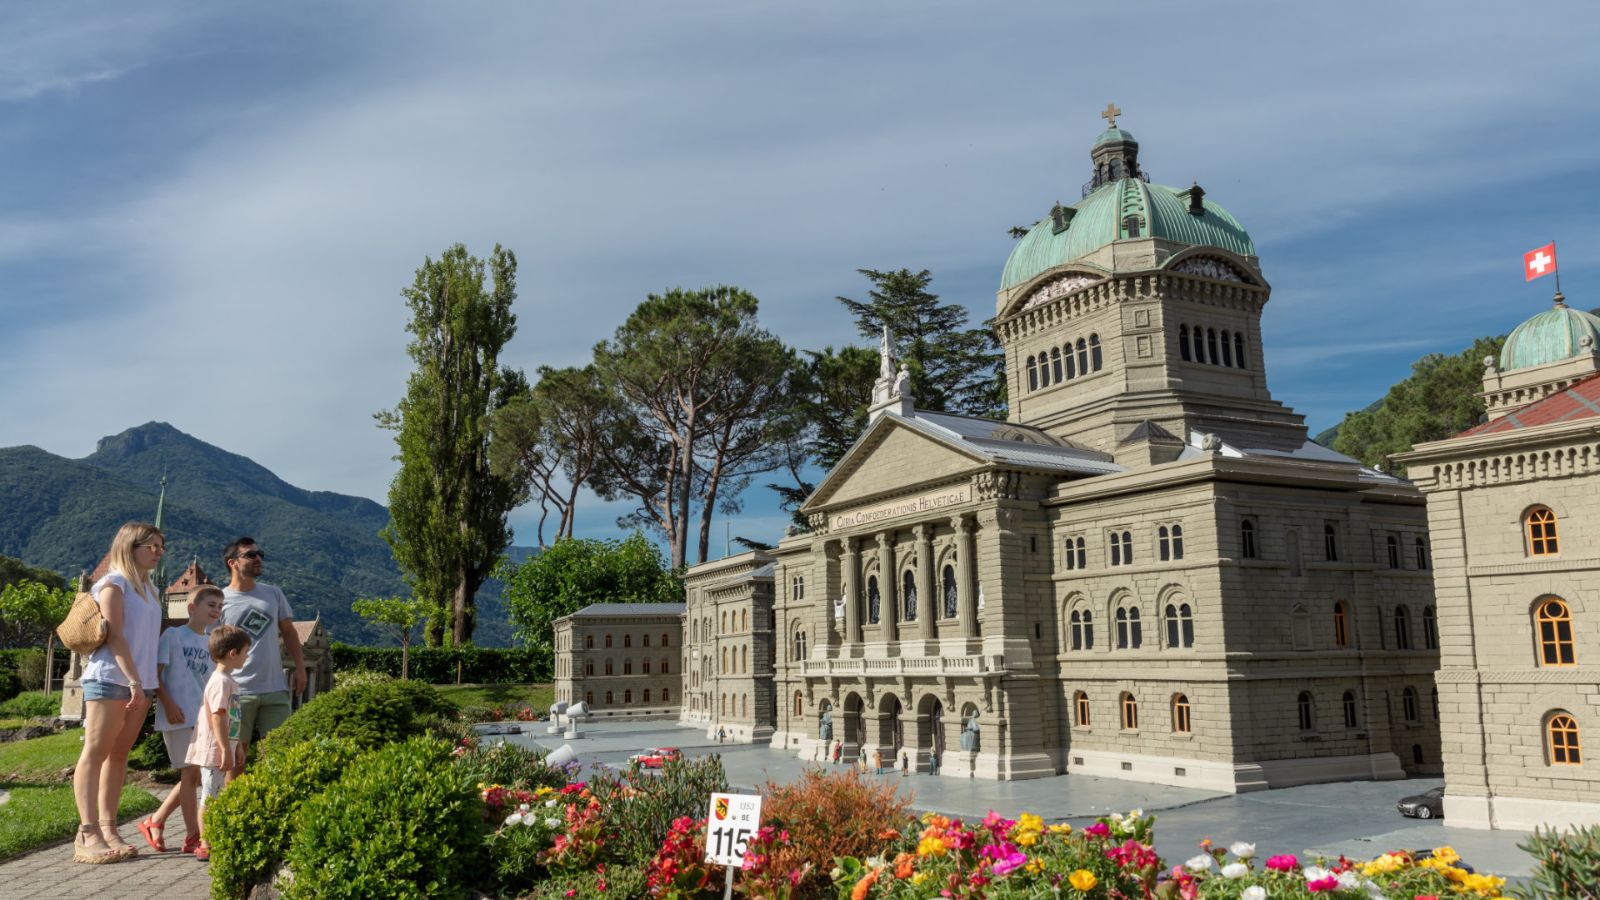 Miniature of Parliament Building, Swissminiatur